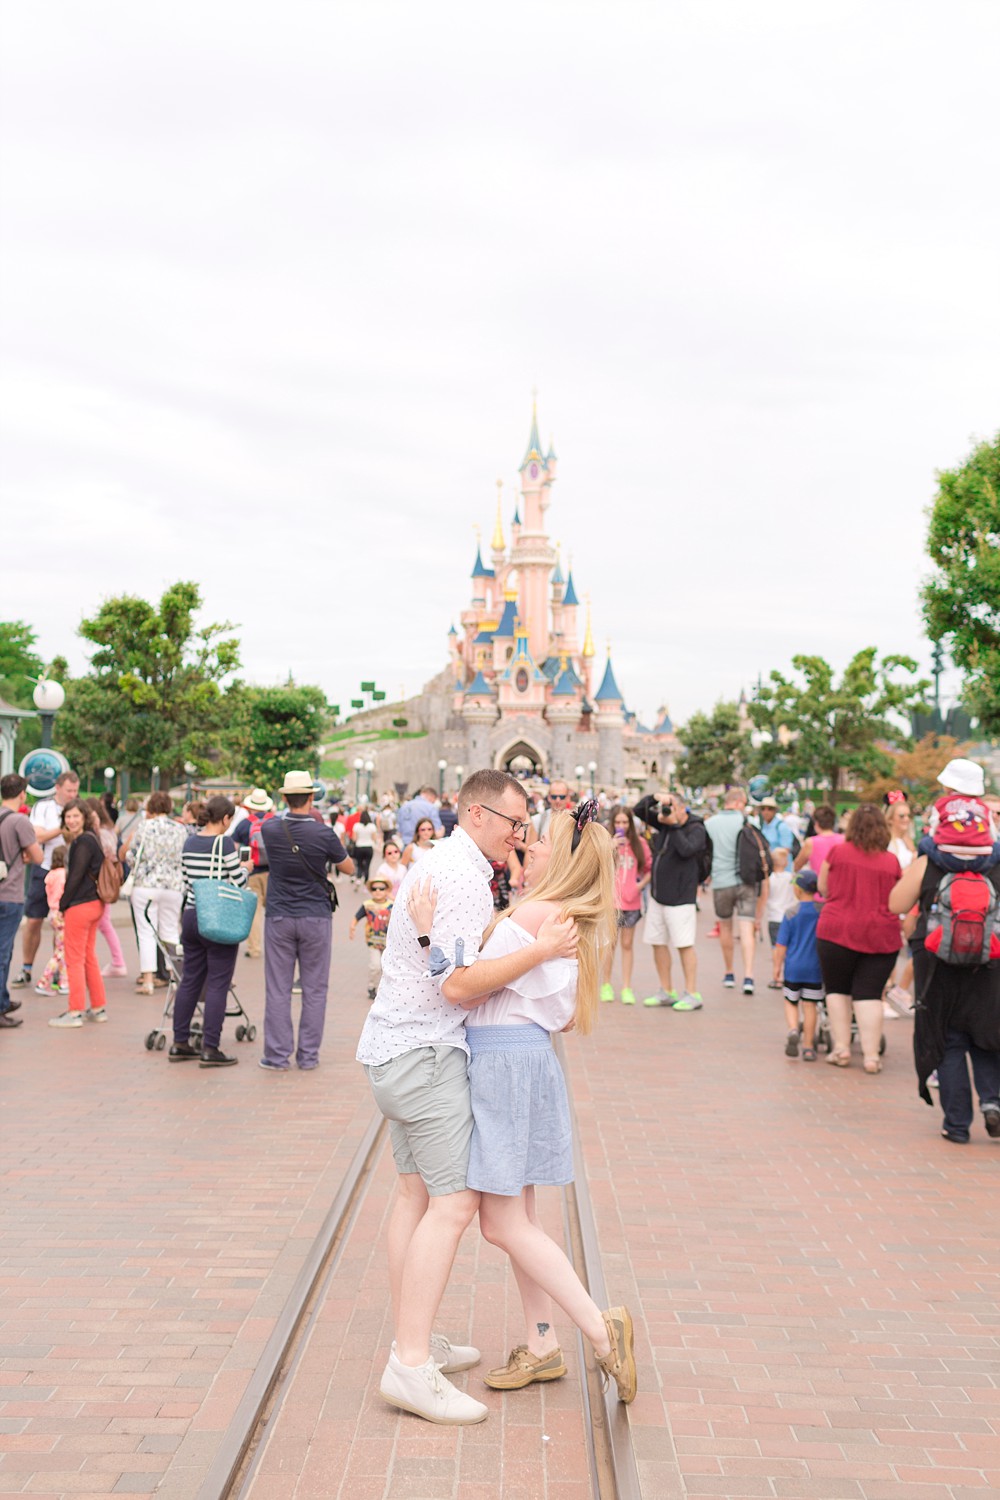 Proposal in front of Sleeping Beauty Castle at Disneyland Paris